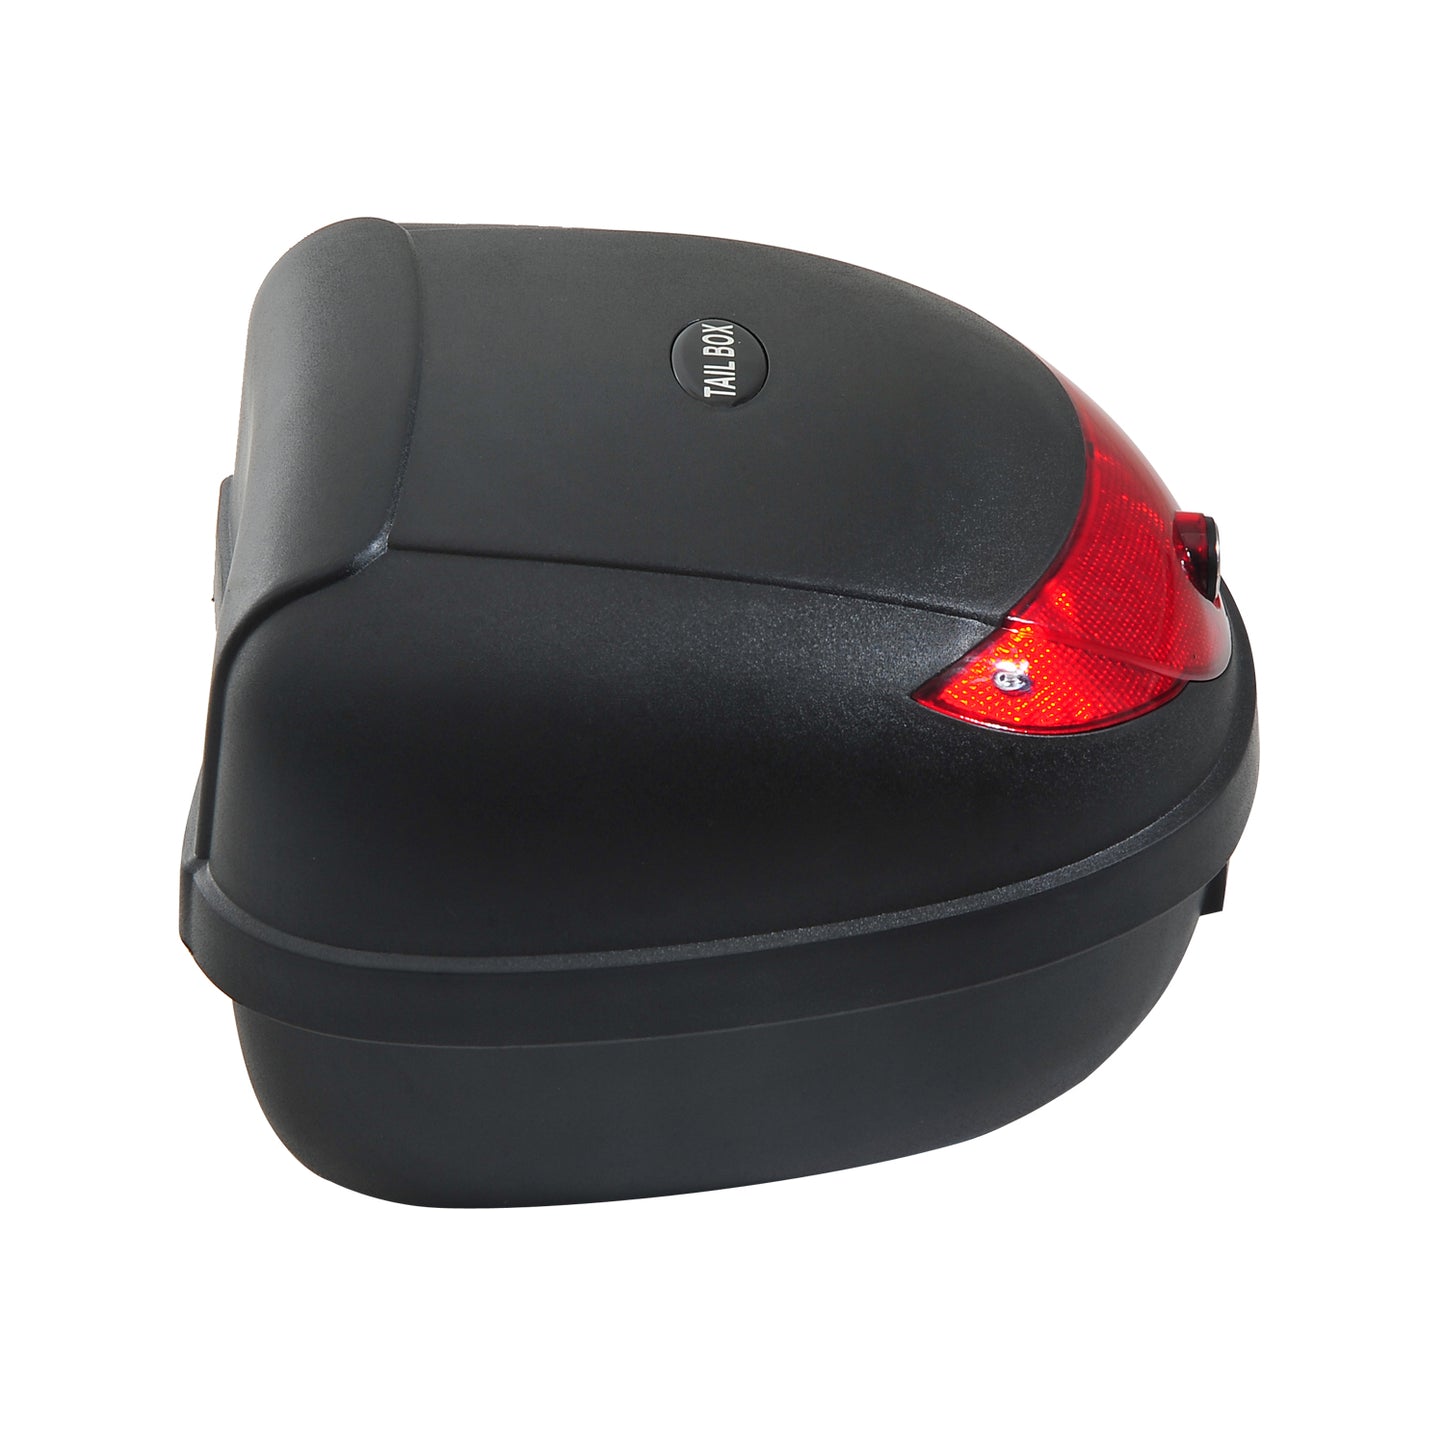 HOMCOM 24 L Motorcycle Luggage Case W/Reflectors-Black/Red